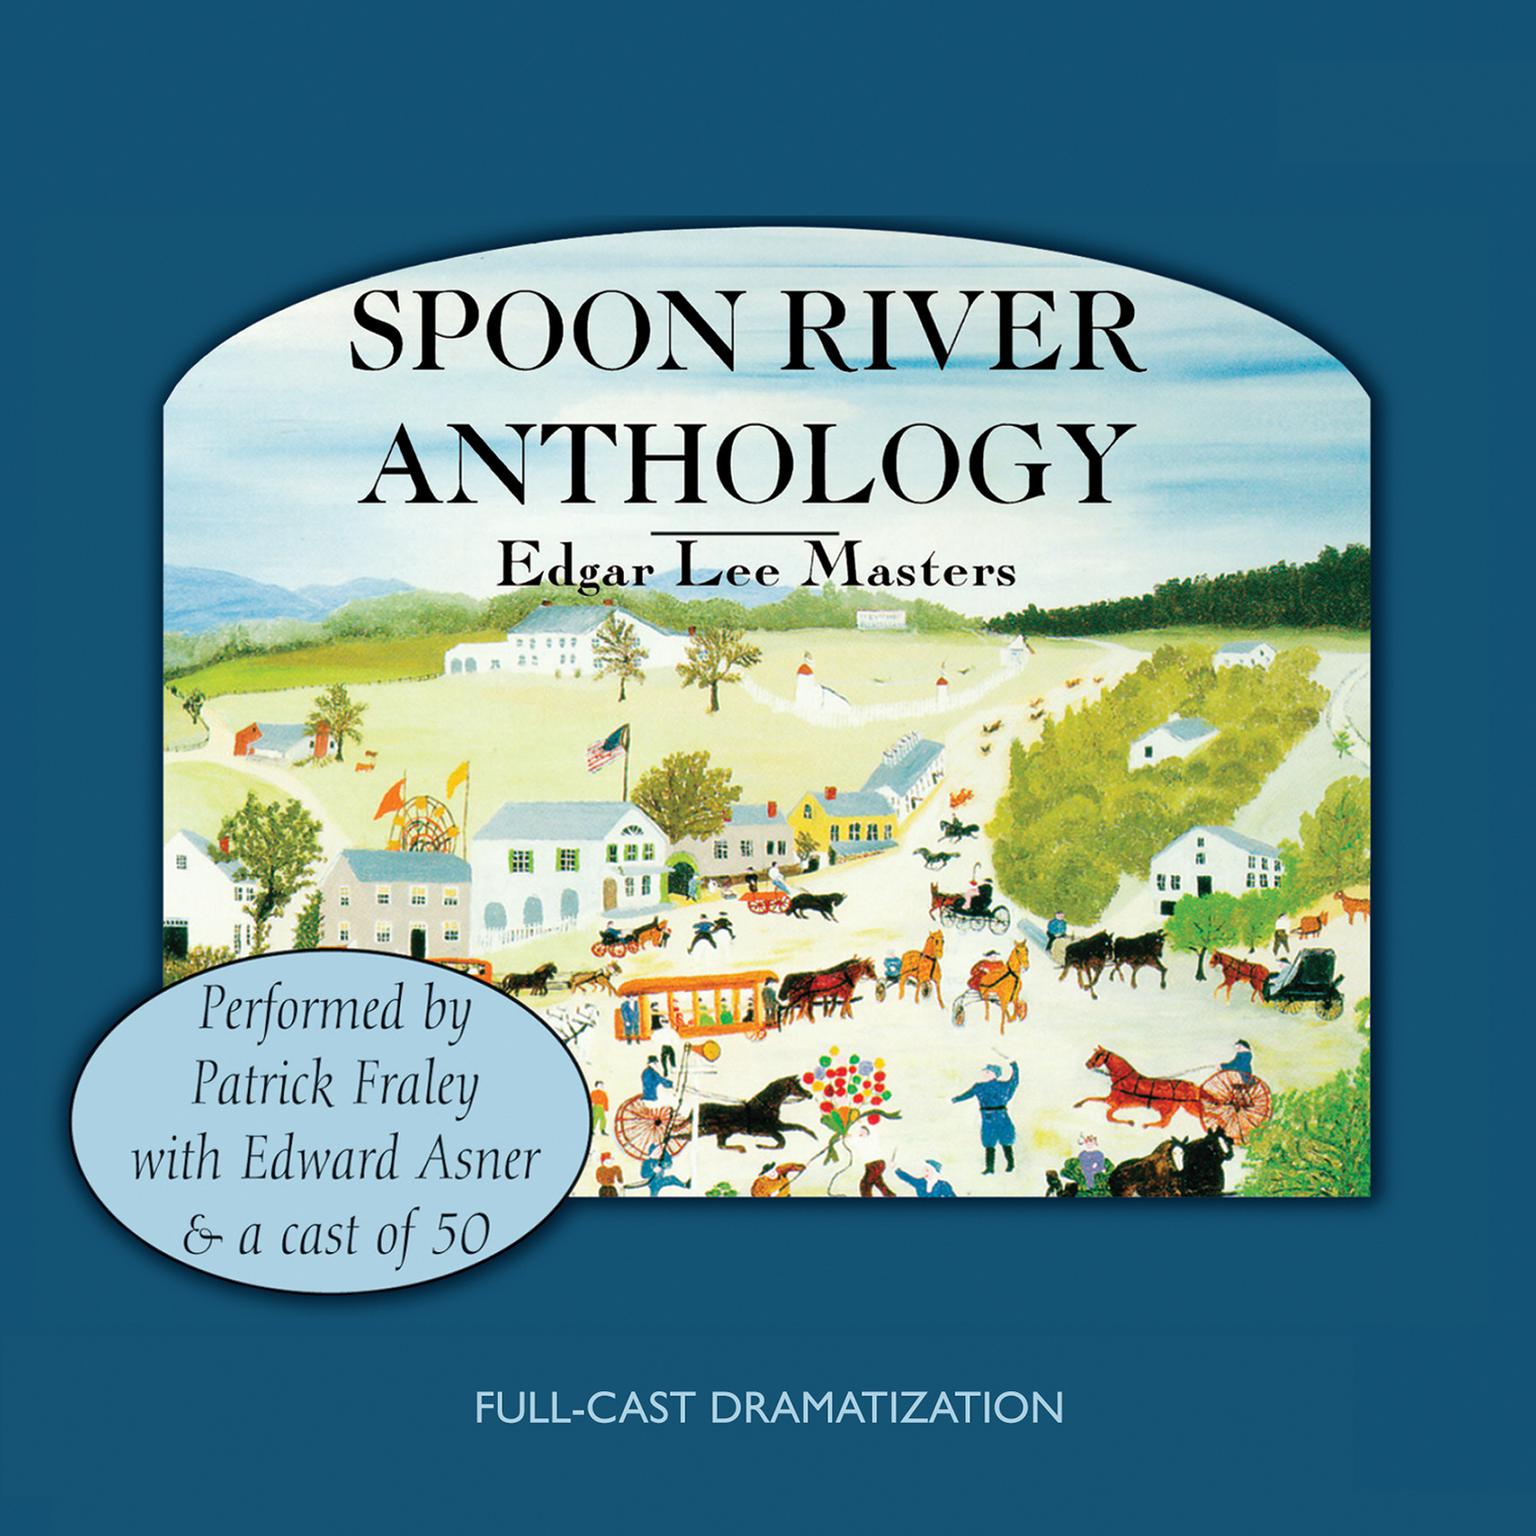 Spoon River Anthology Audiobook, by Edgar Lee Masters